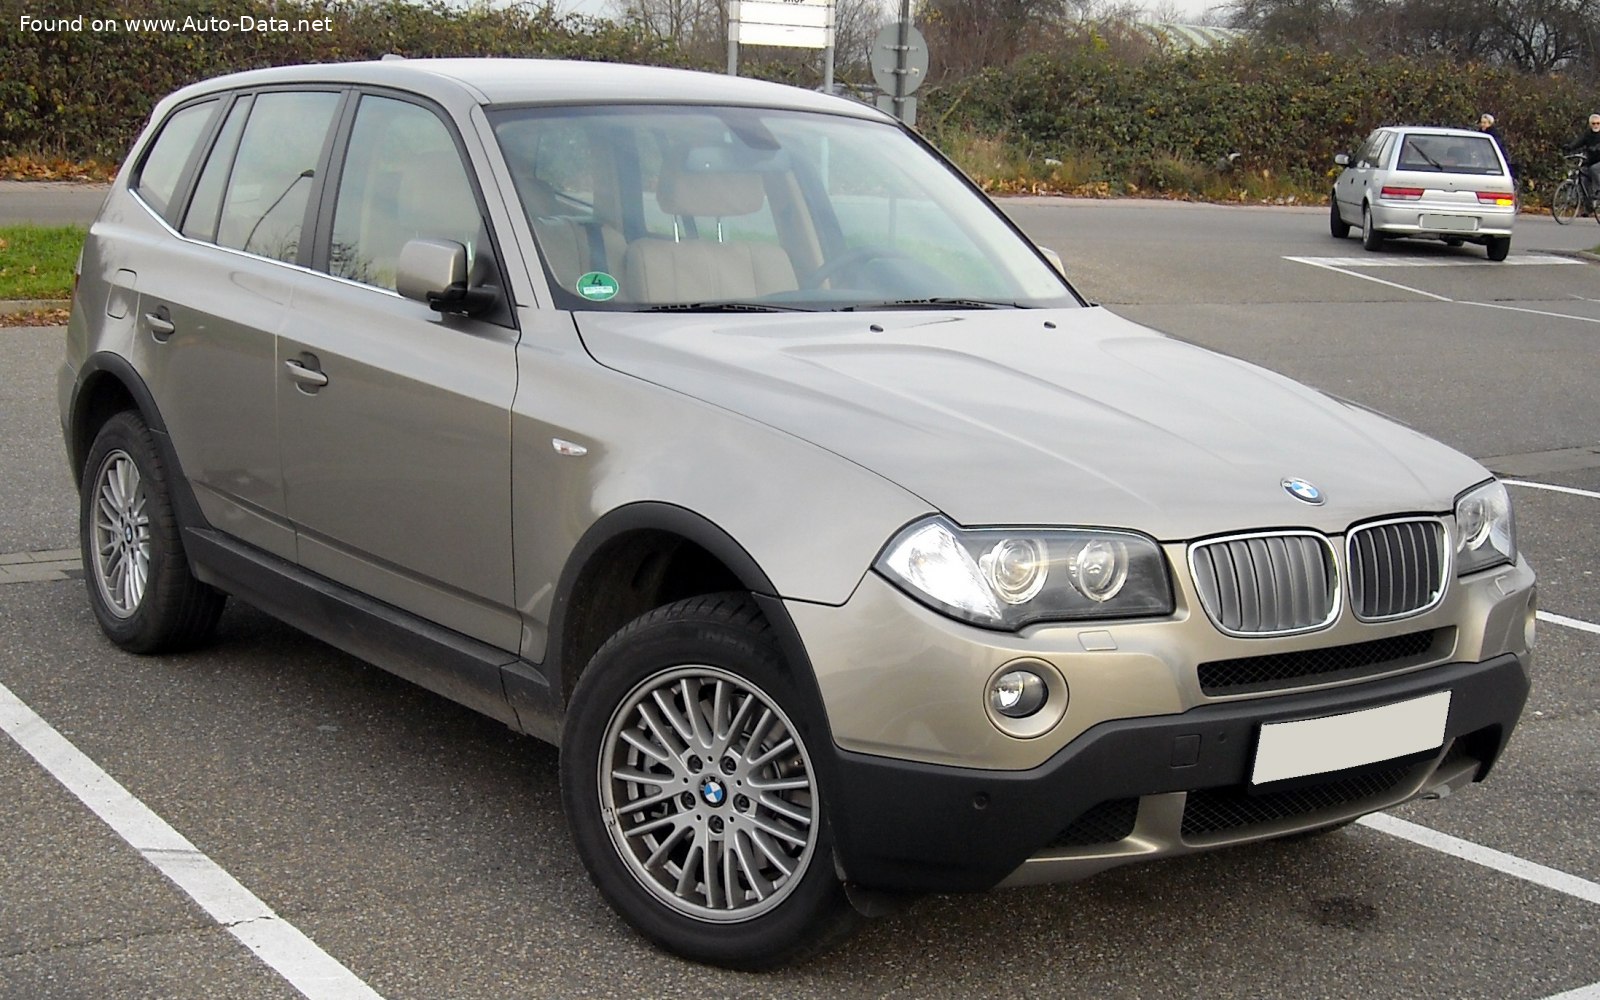 2006 BMW X3 (E83, facelift 2006) 2.5si (218 Hp)  Technical specs, data,  fuel consumption, Dimensions